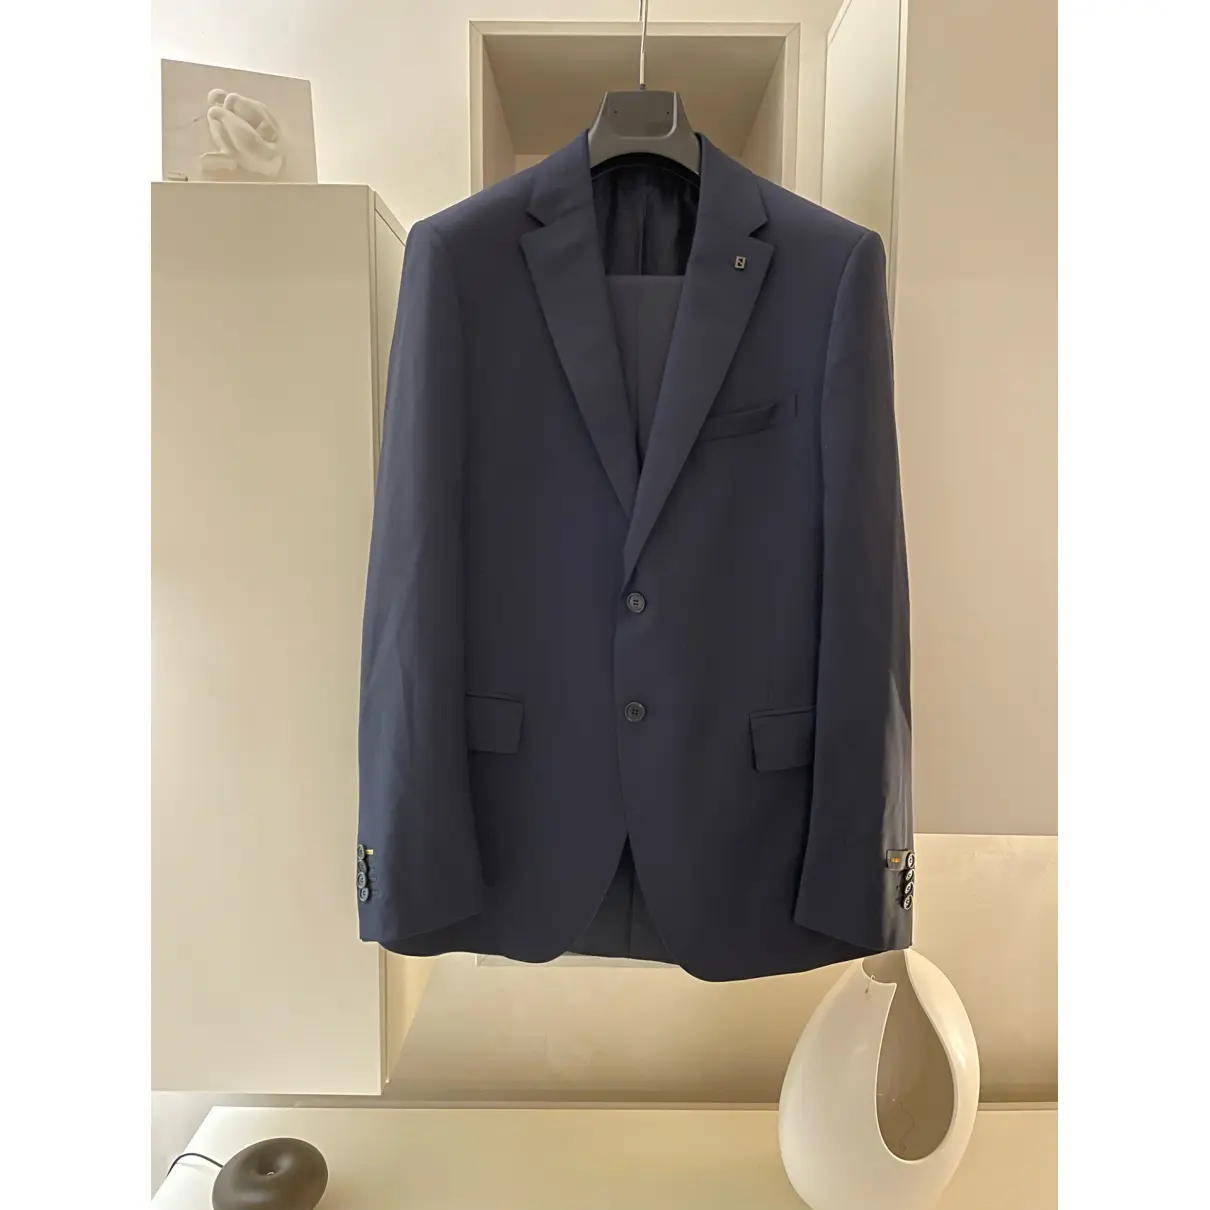 Buy Fendi Suit online